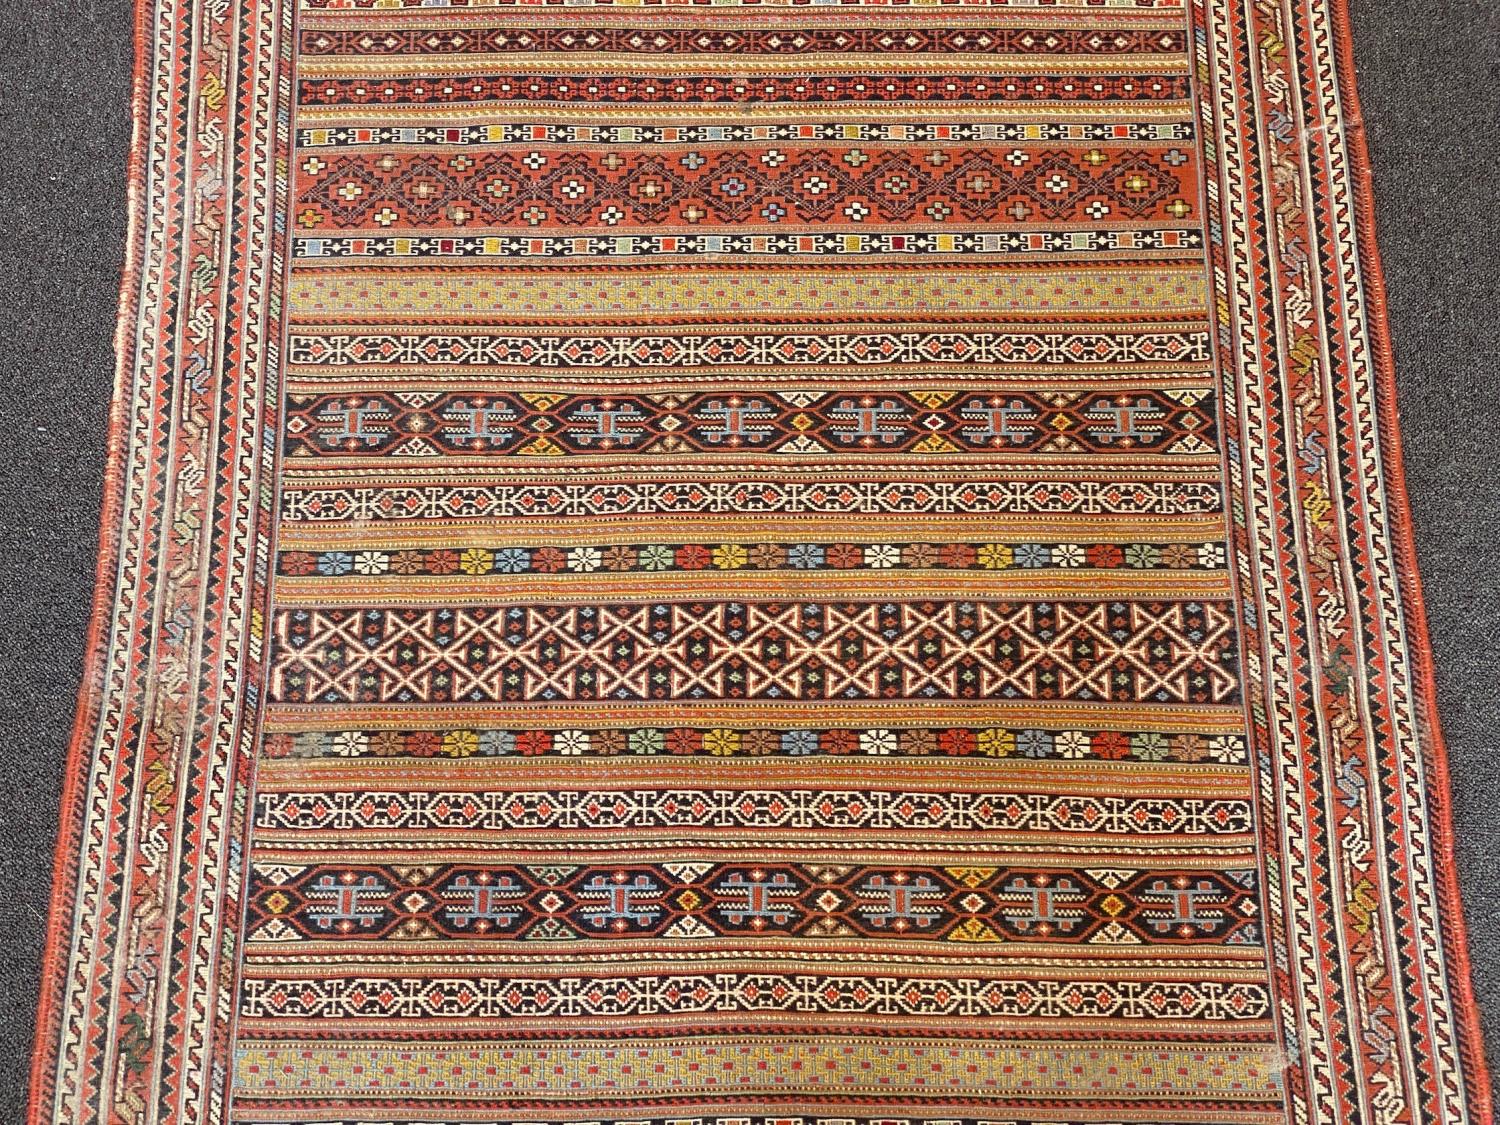 A fine Sumac flatweave polychrome rug 160 x 100 cms - Image 3 of 7